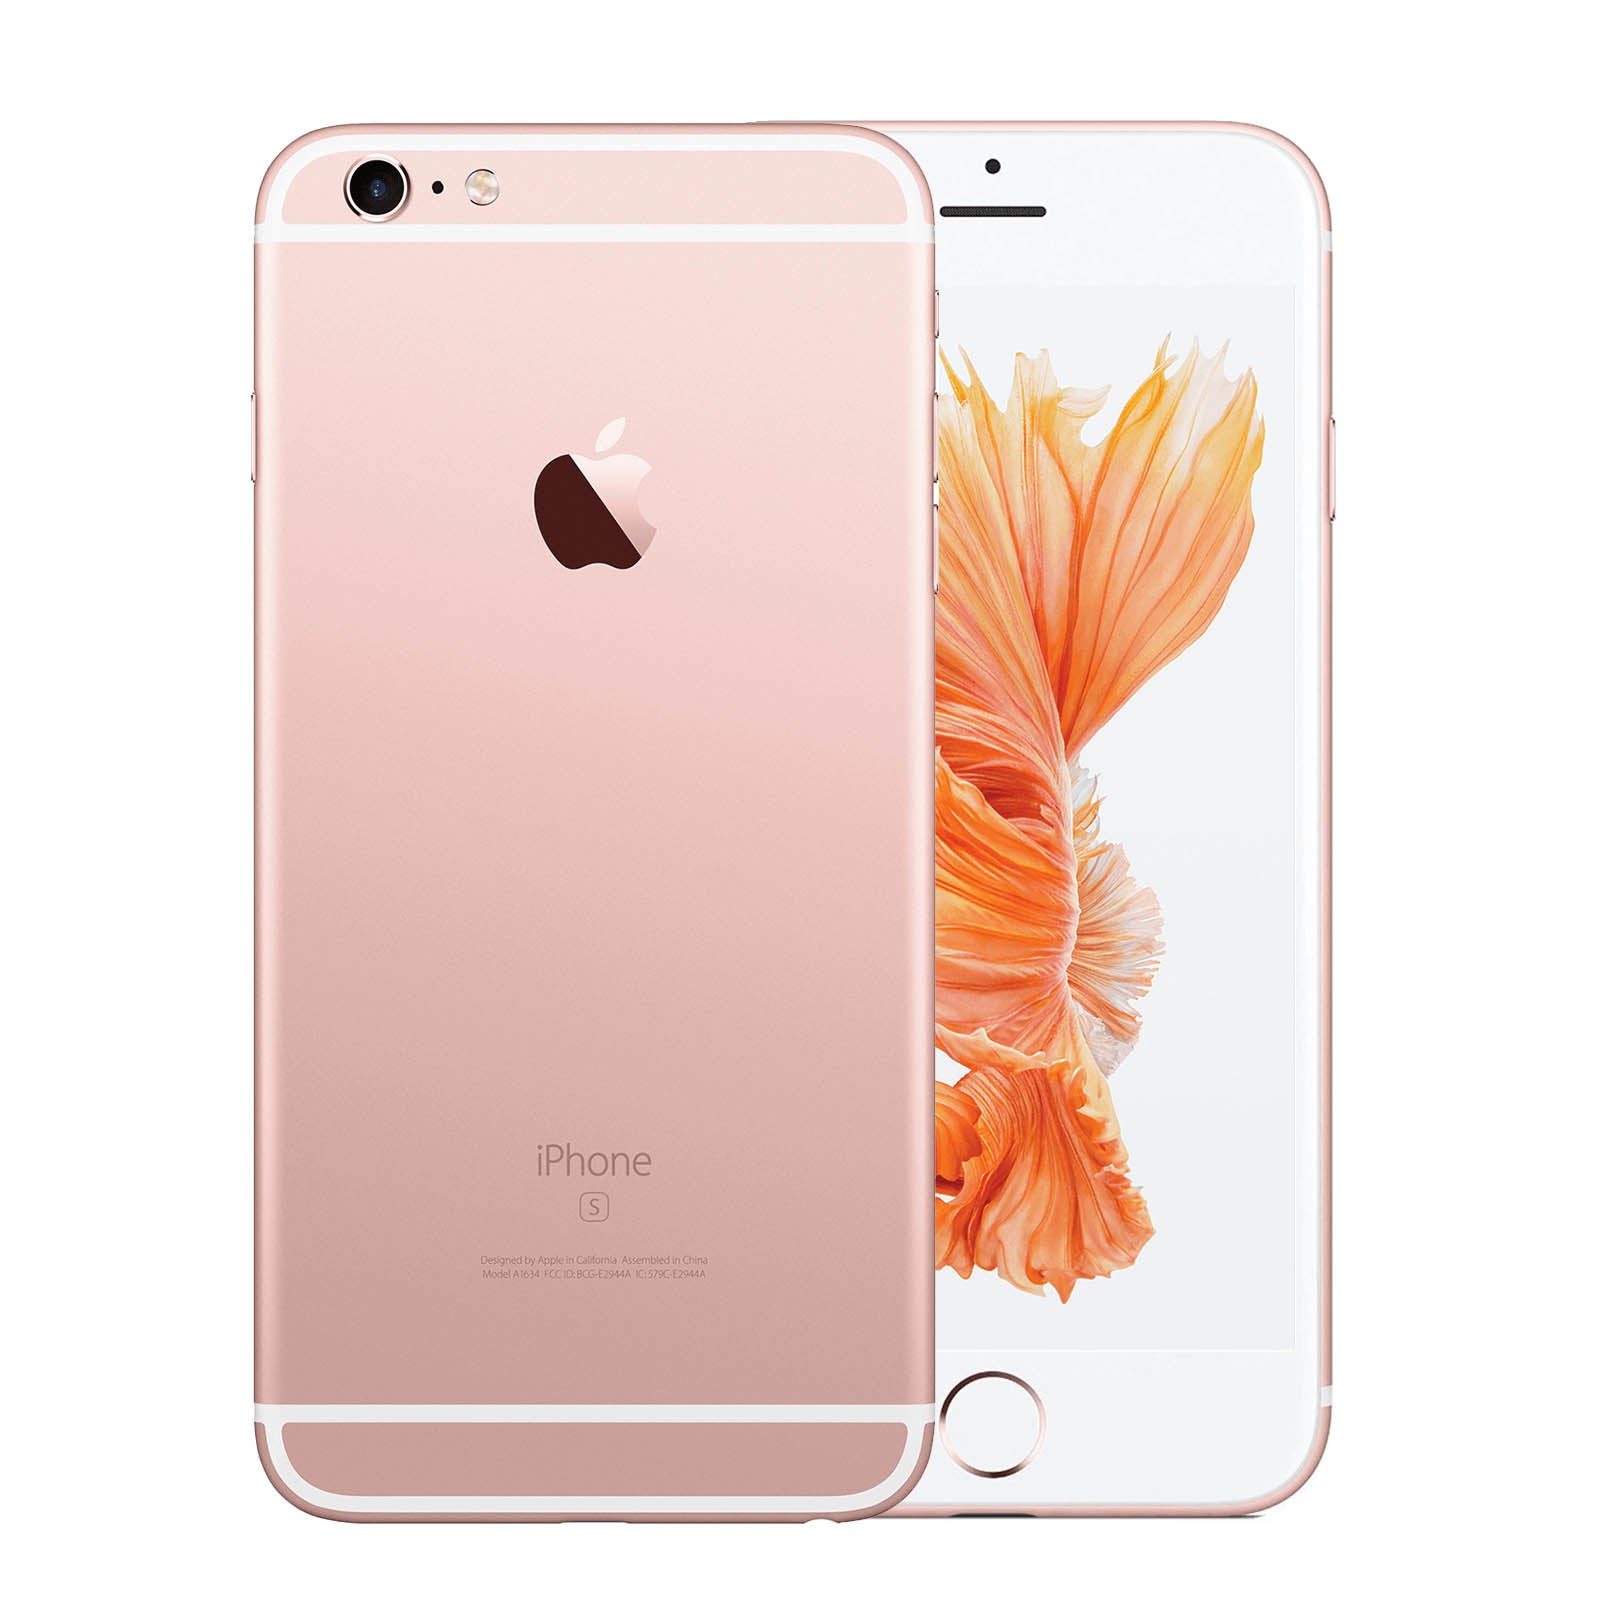 Apple iPhone 6S Plus 32GB Rose Gold Good - Unlocked